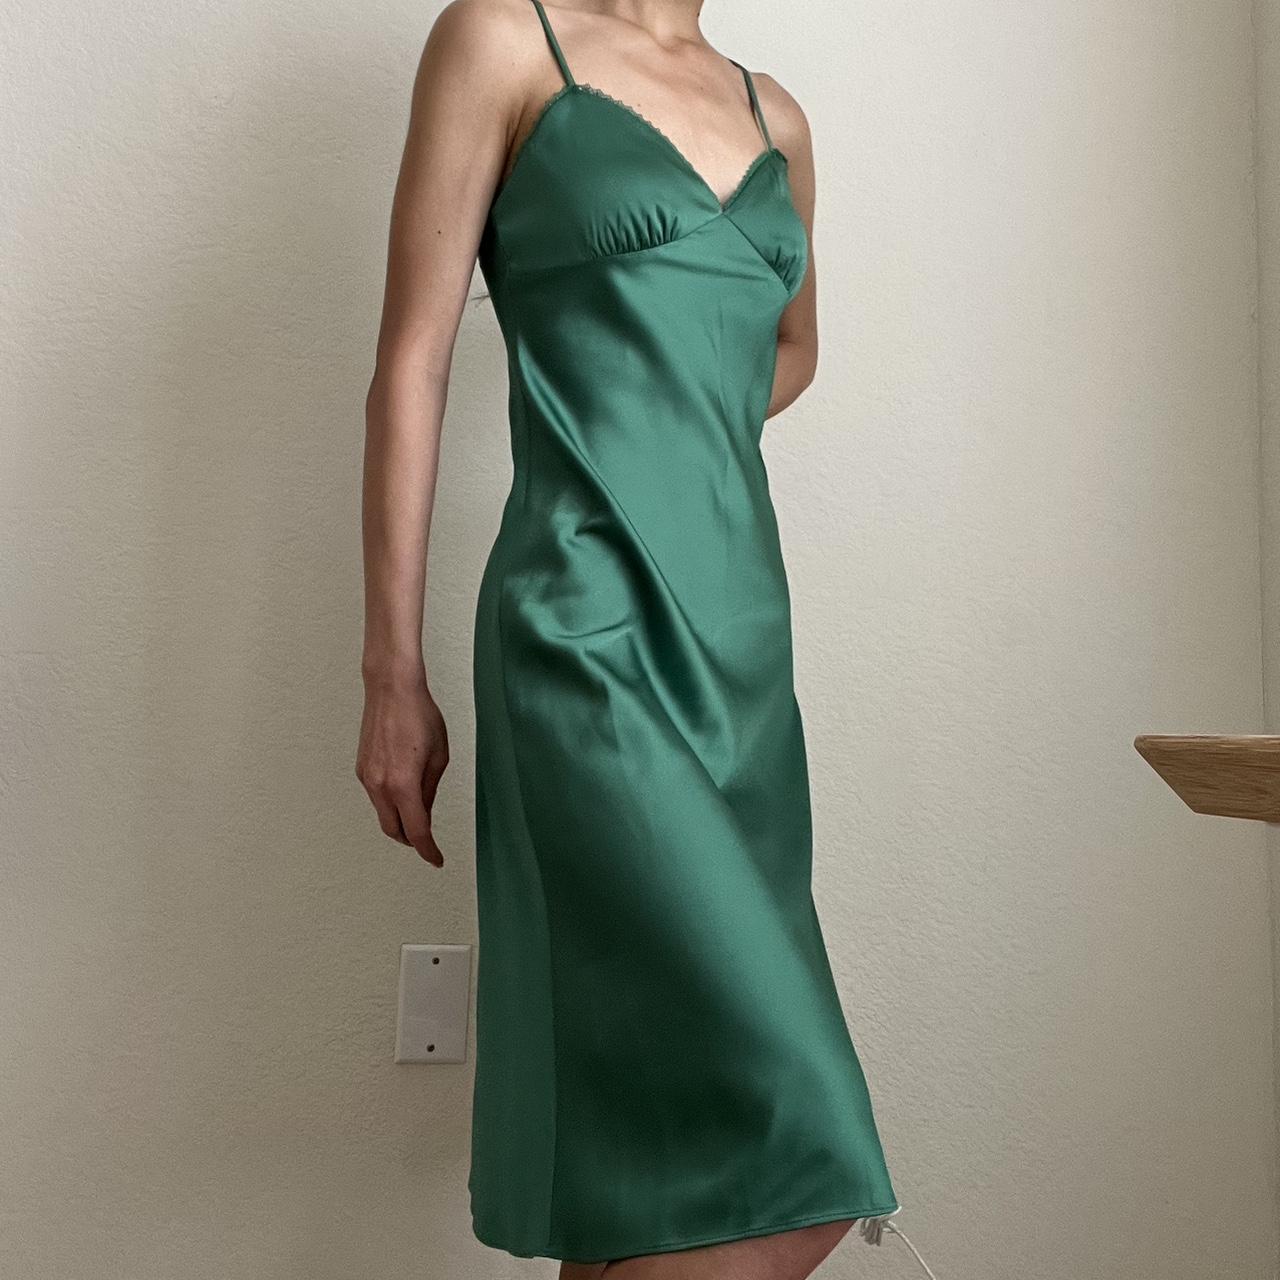 Brandy Melville midi dress in dark green and white - Depop